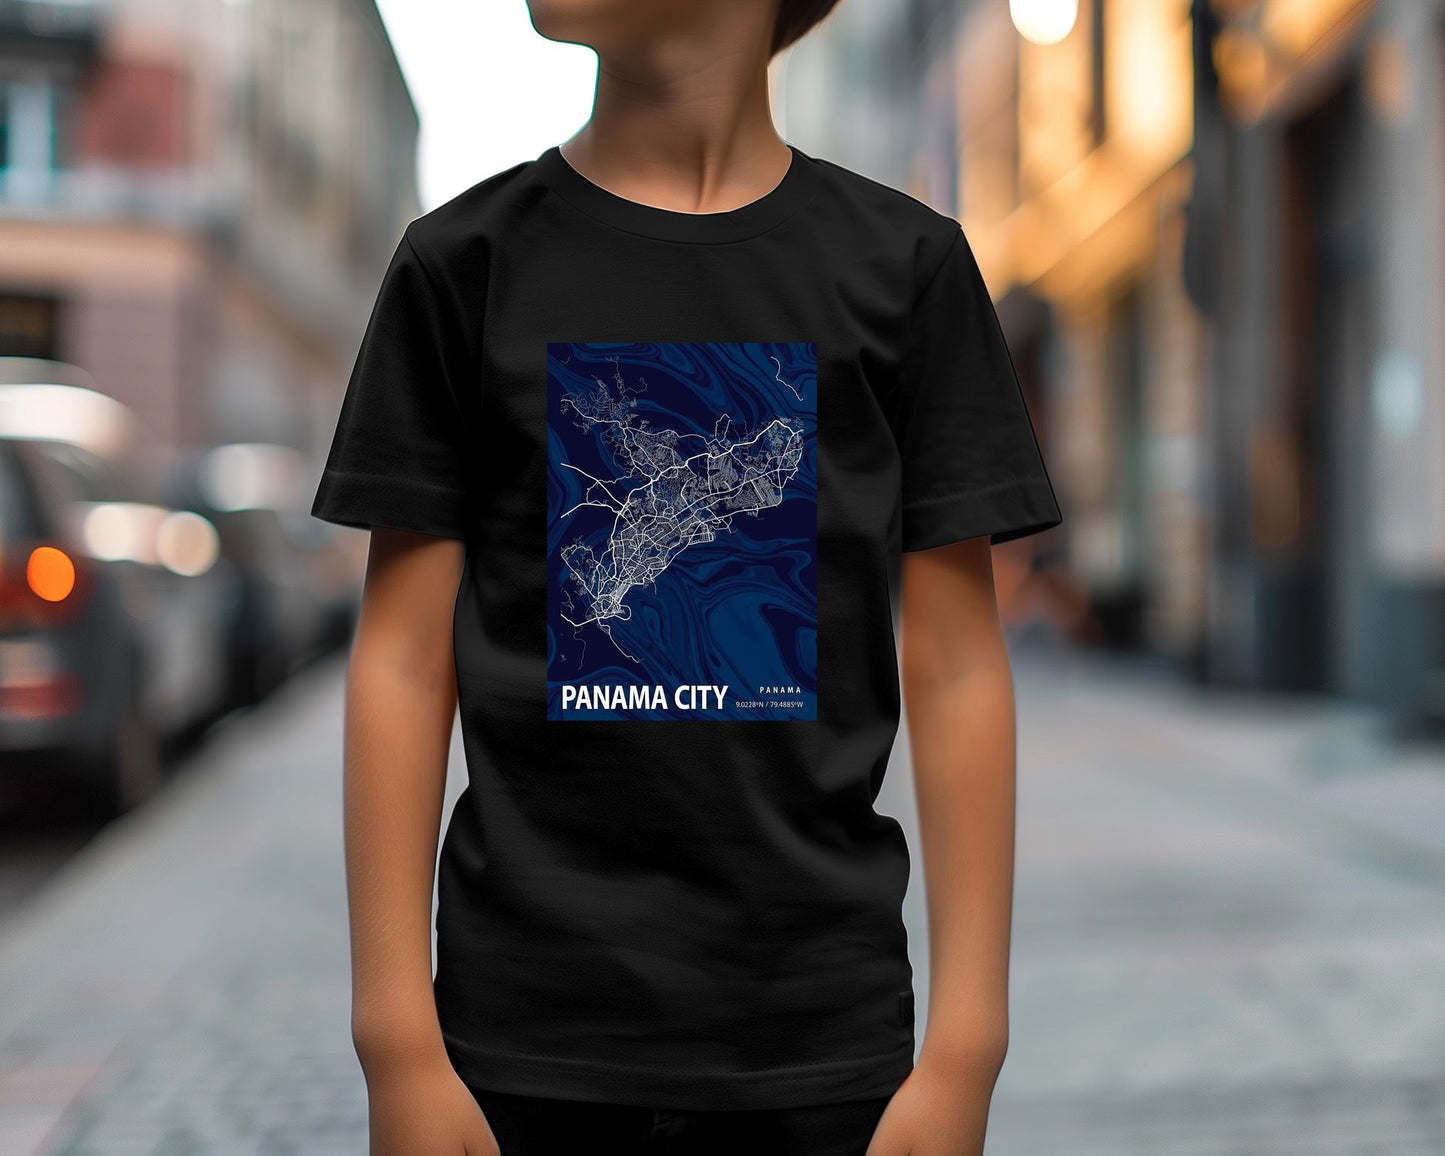 PANAMA CITY CROCUS MARBLE MAP  - @Helios